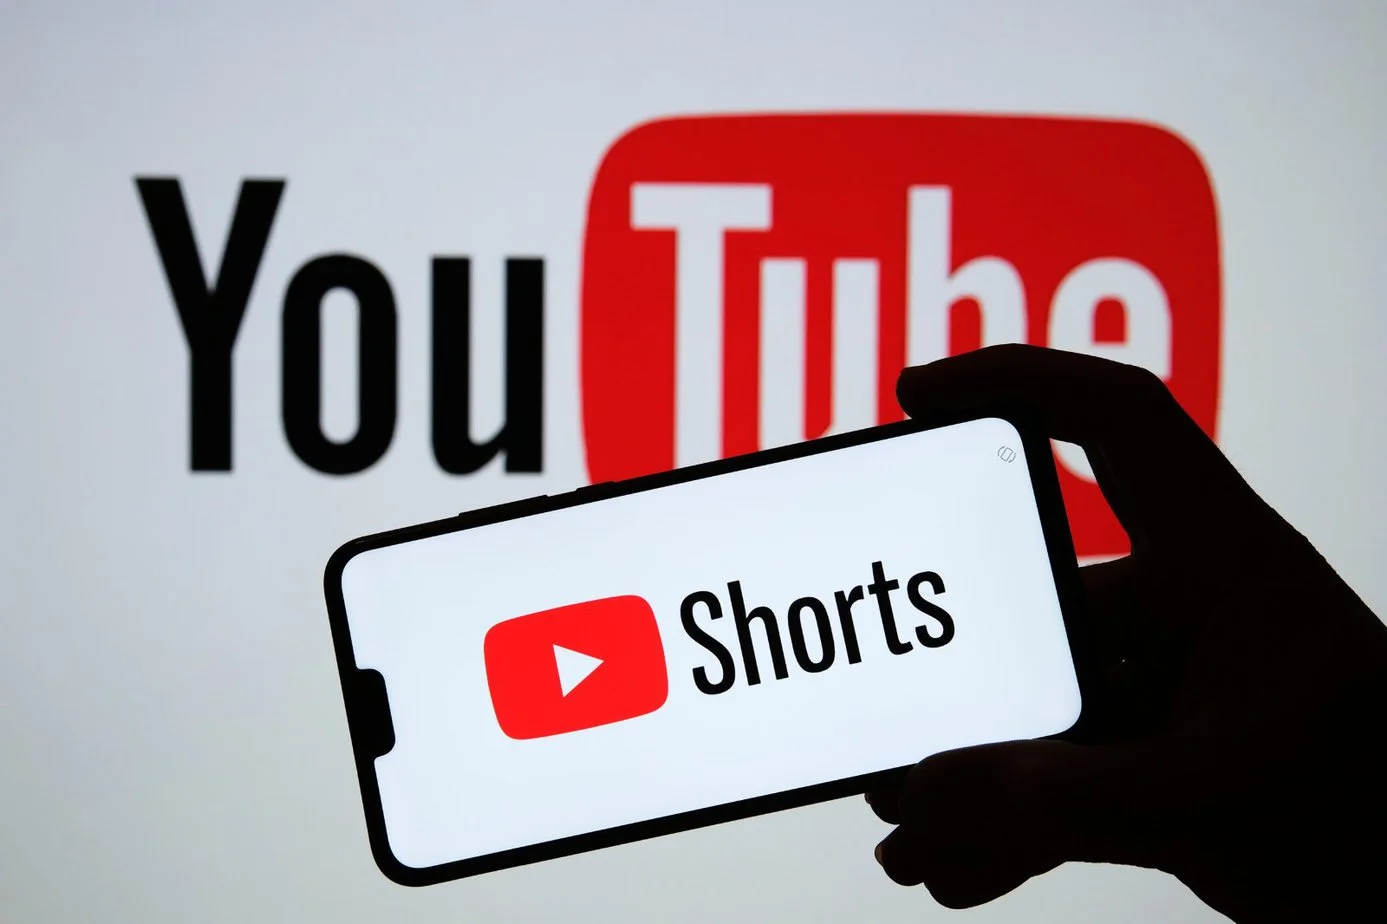 youtube shorts watermark video